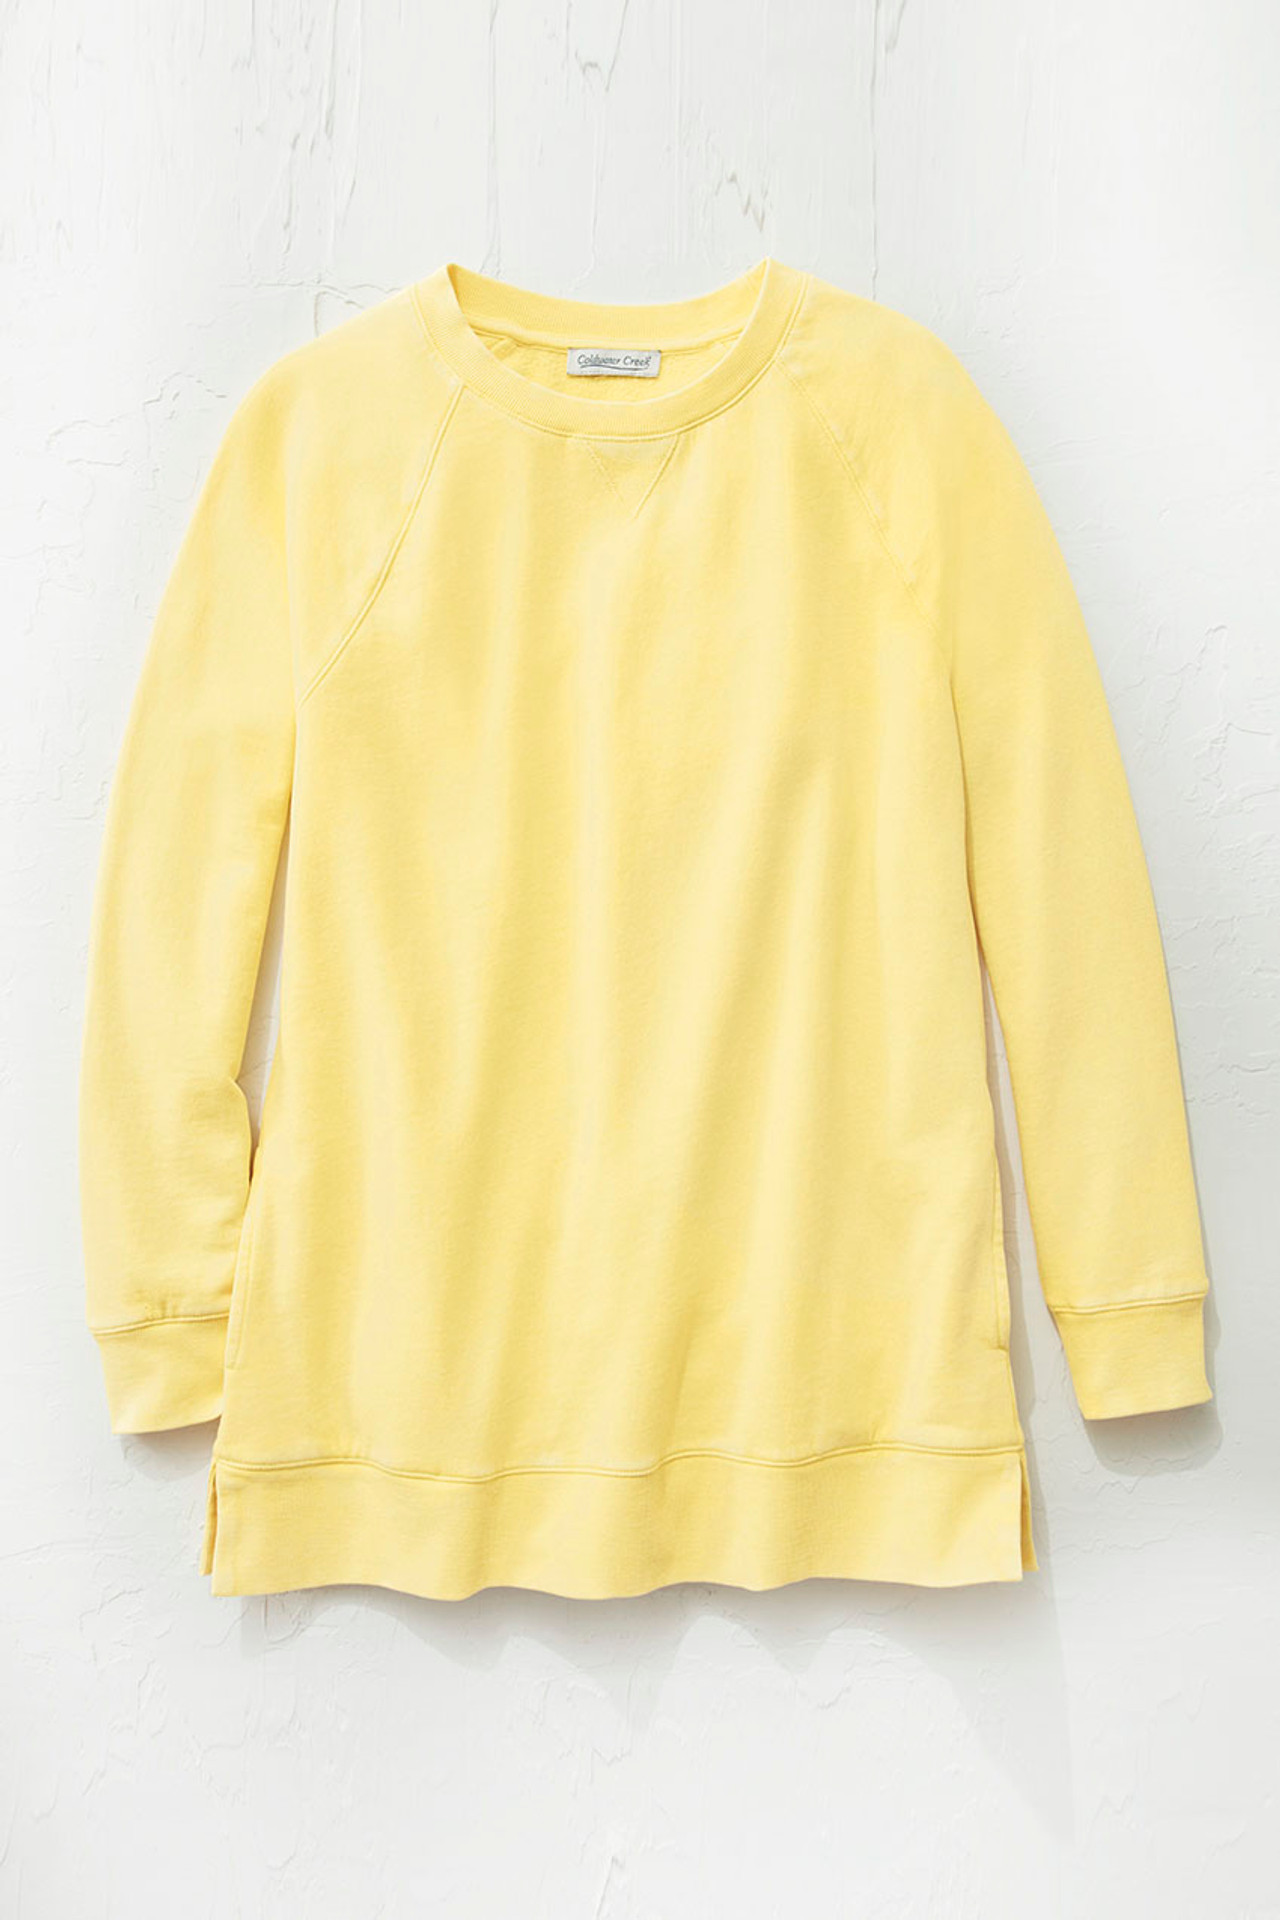 Colorwash Tunic Sweatshirt